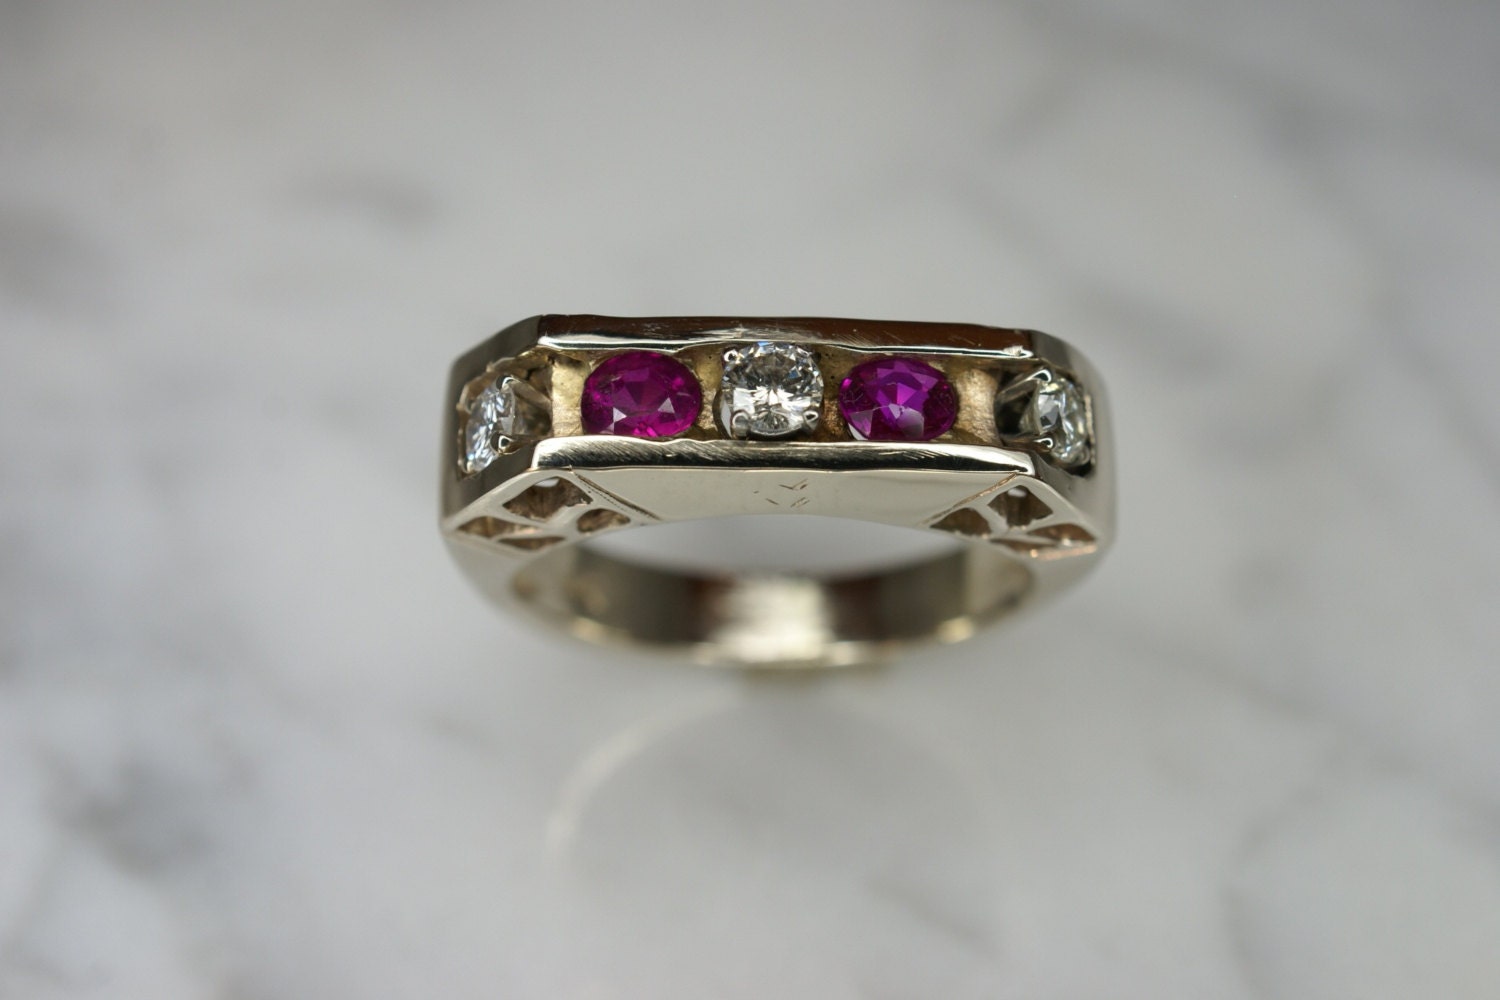 Handmade 14k White Gold Diamond and Pink Tourmaline Ring - Etsy